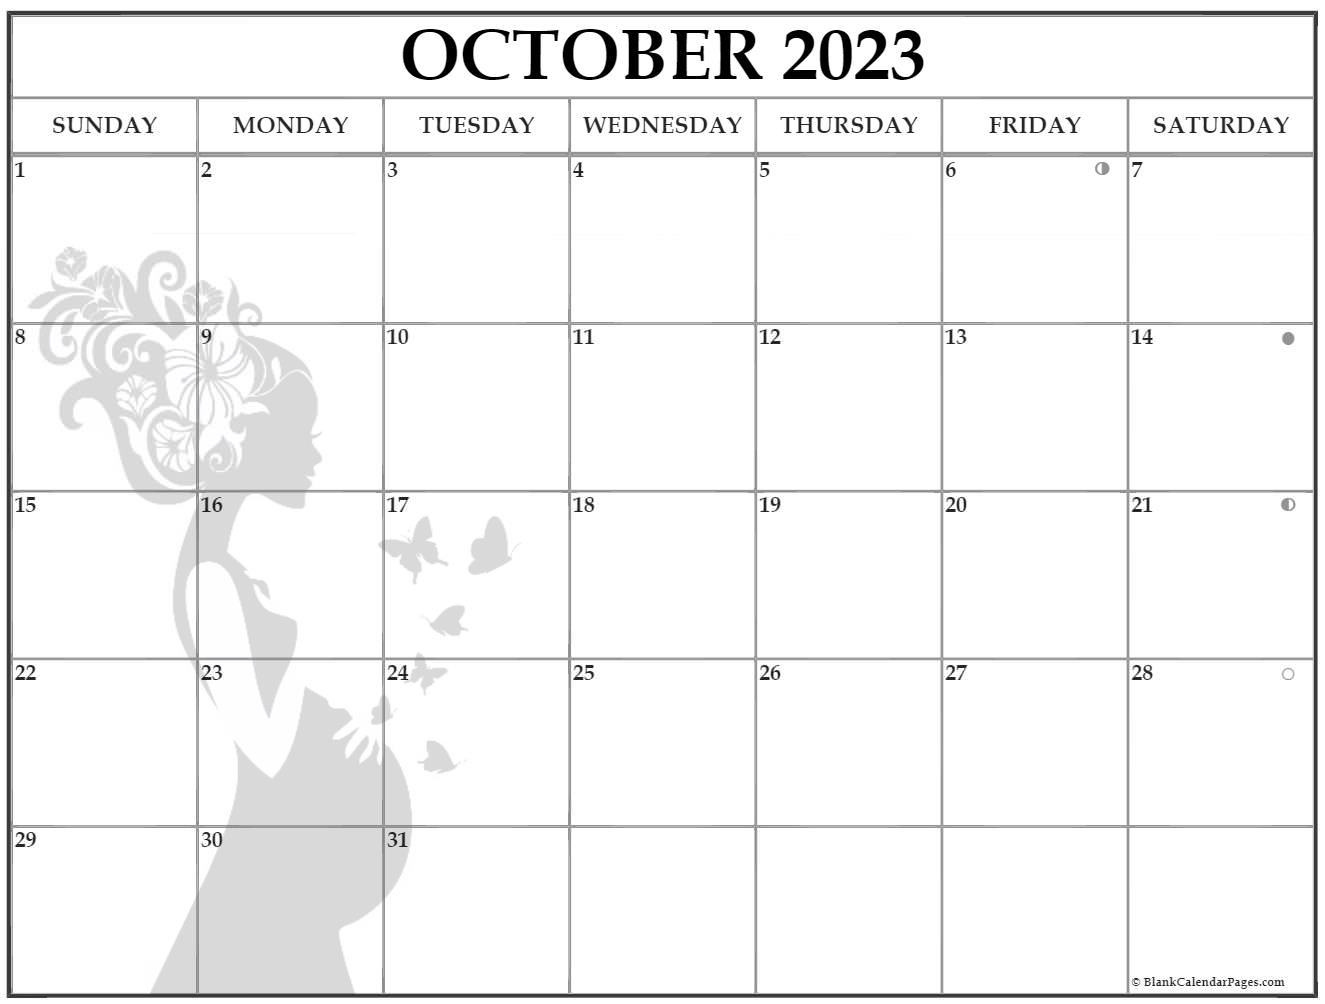 October 2023 Calendar Fertility 1 